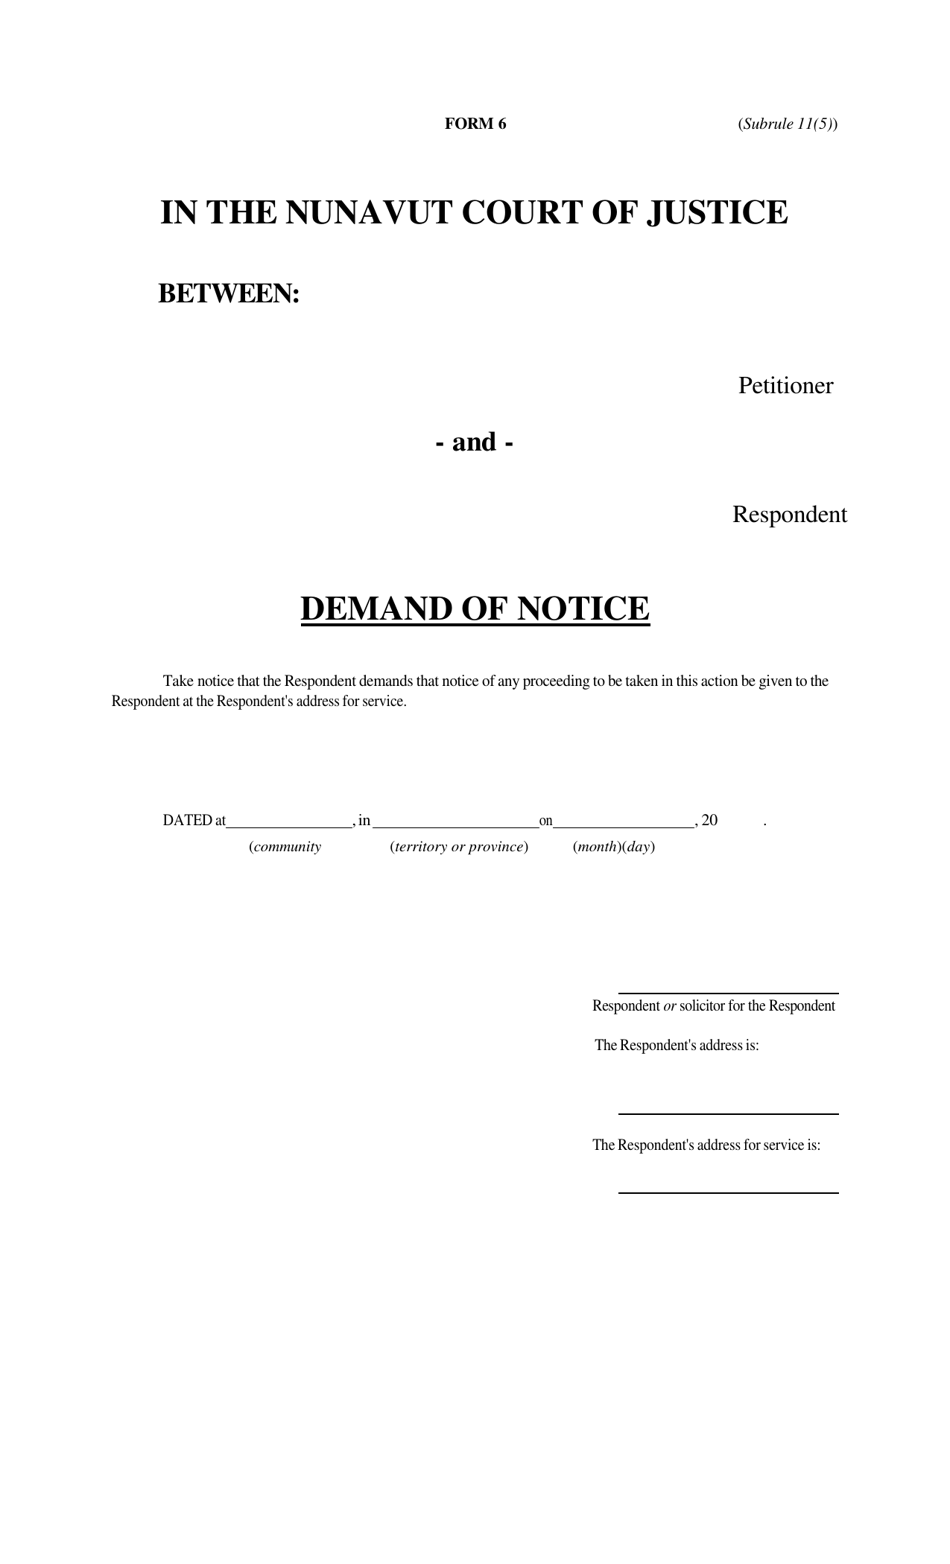 Form 6 Demand of Notice - Nunavut, Canada, Page 1